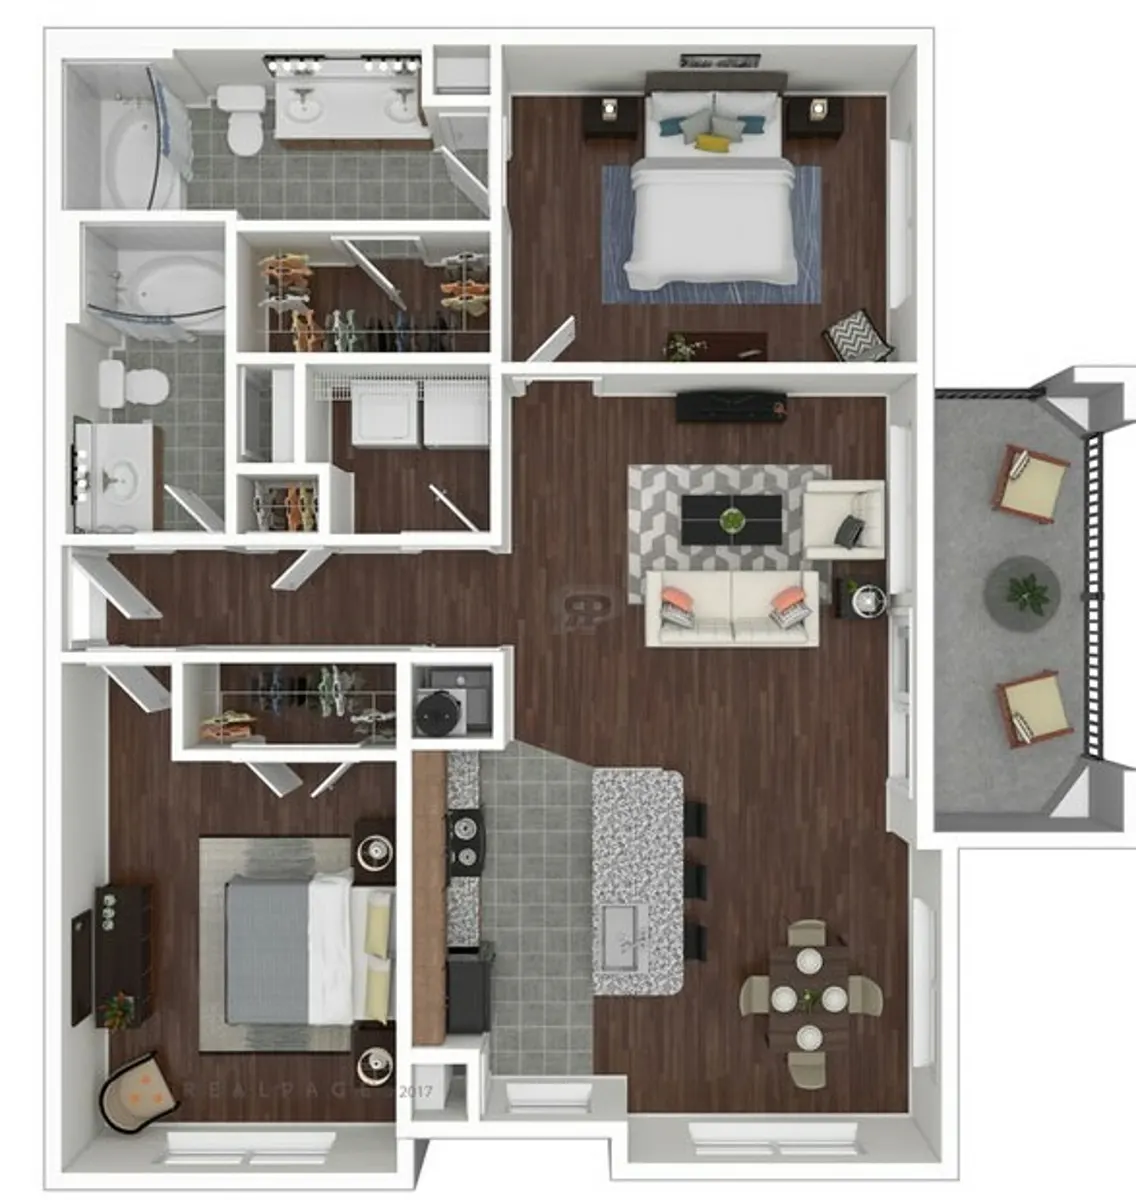 Haven at Main houston apartments floor plan 10